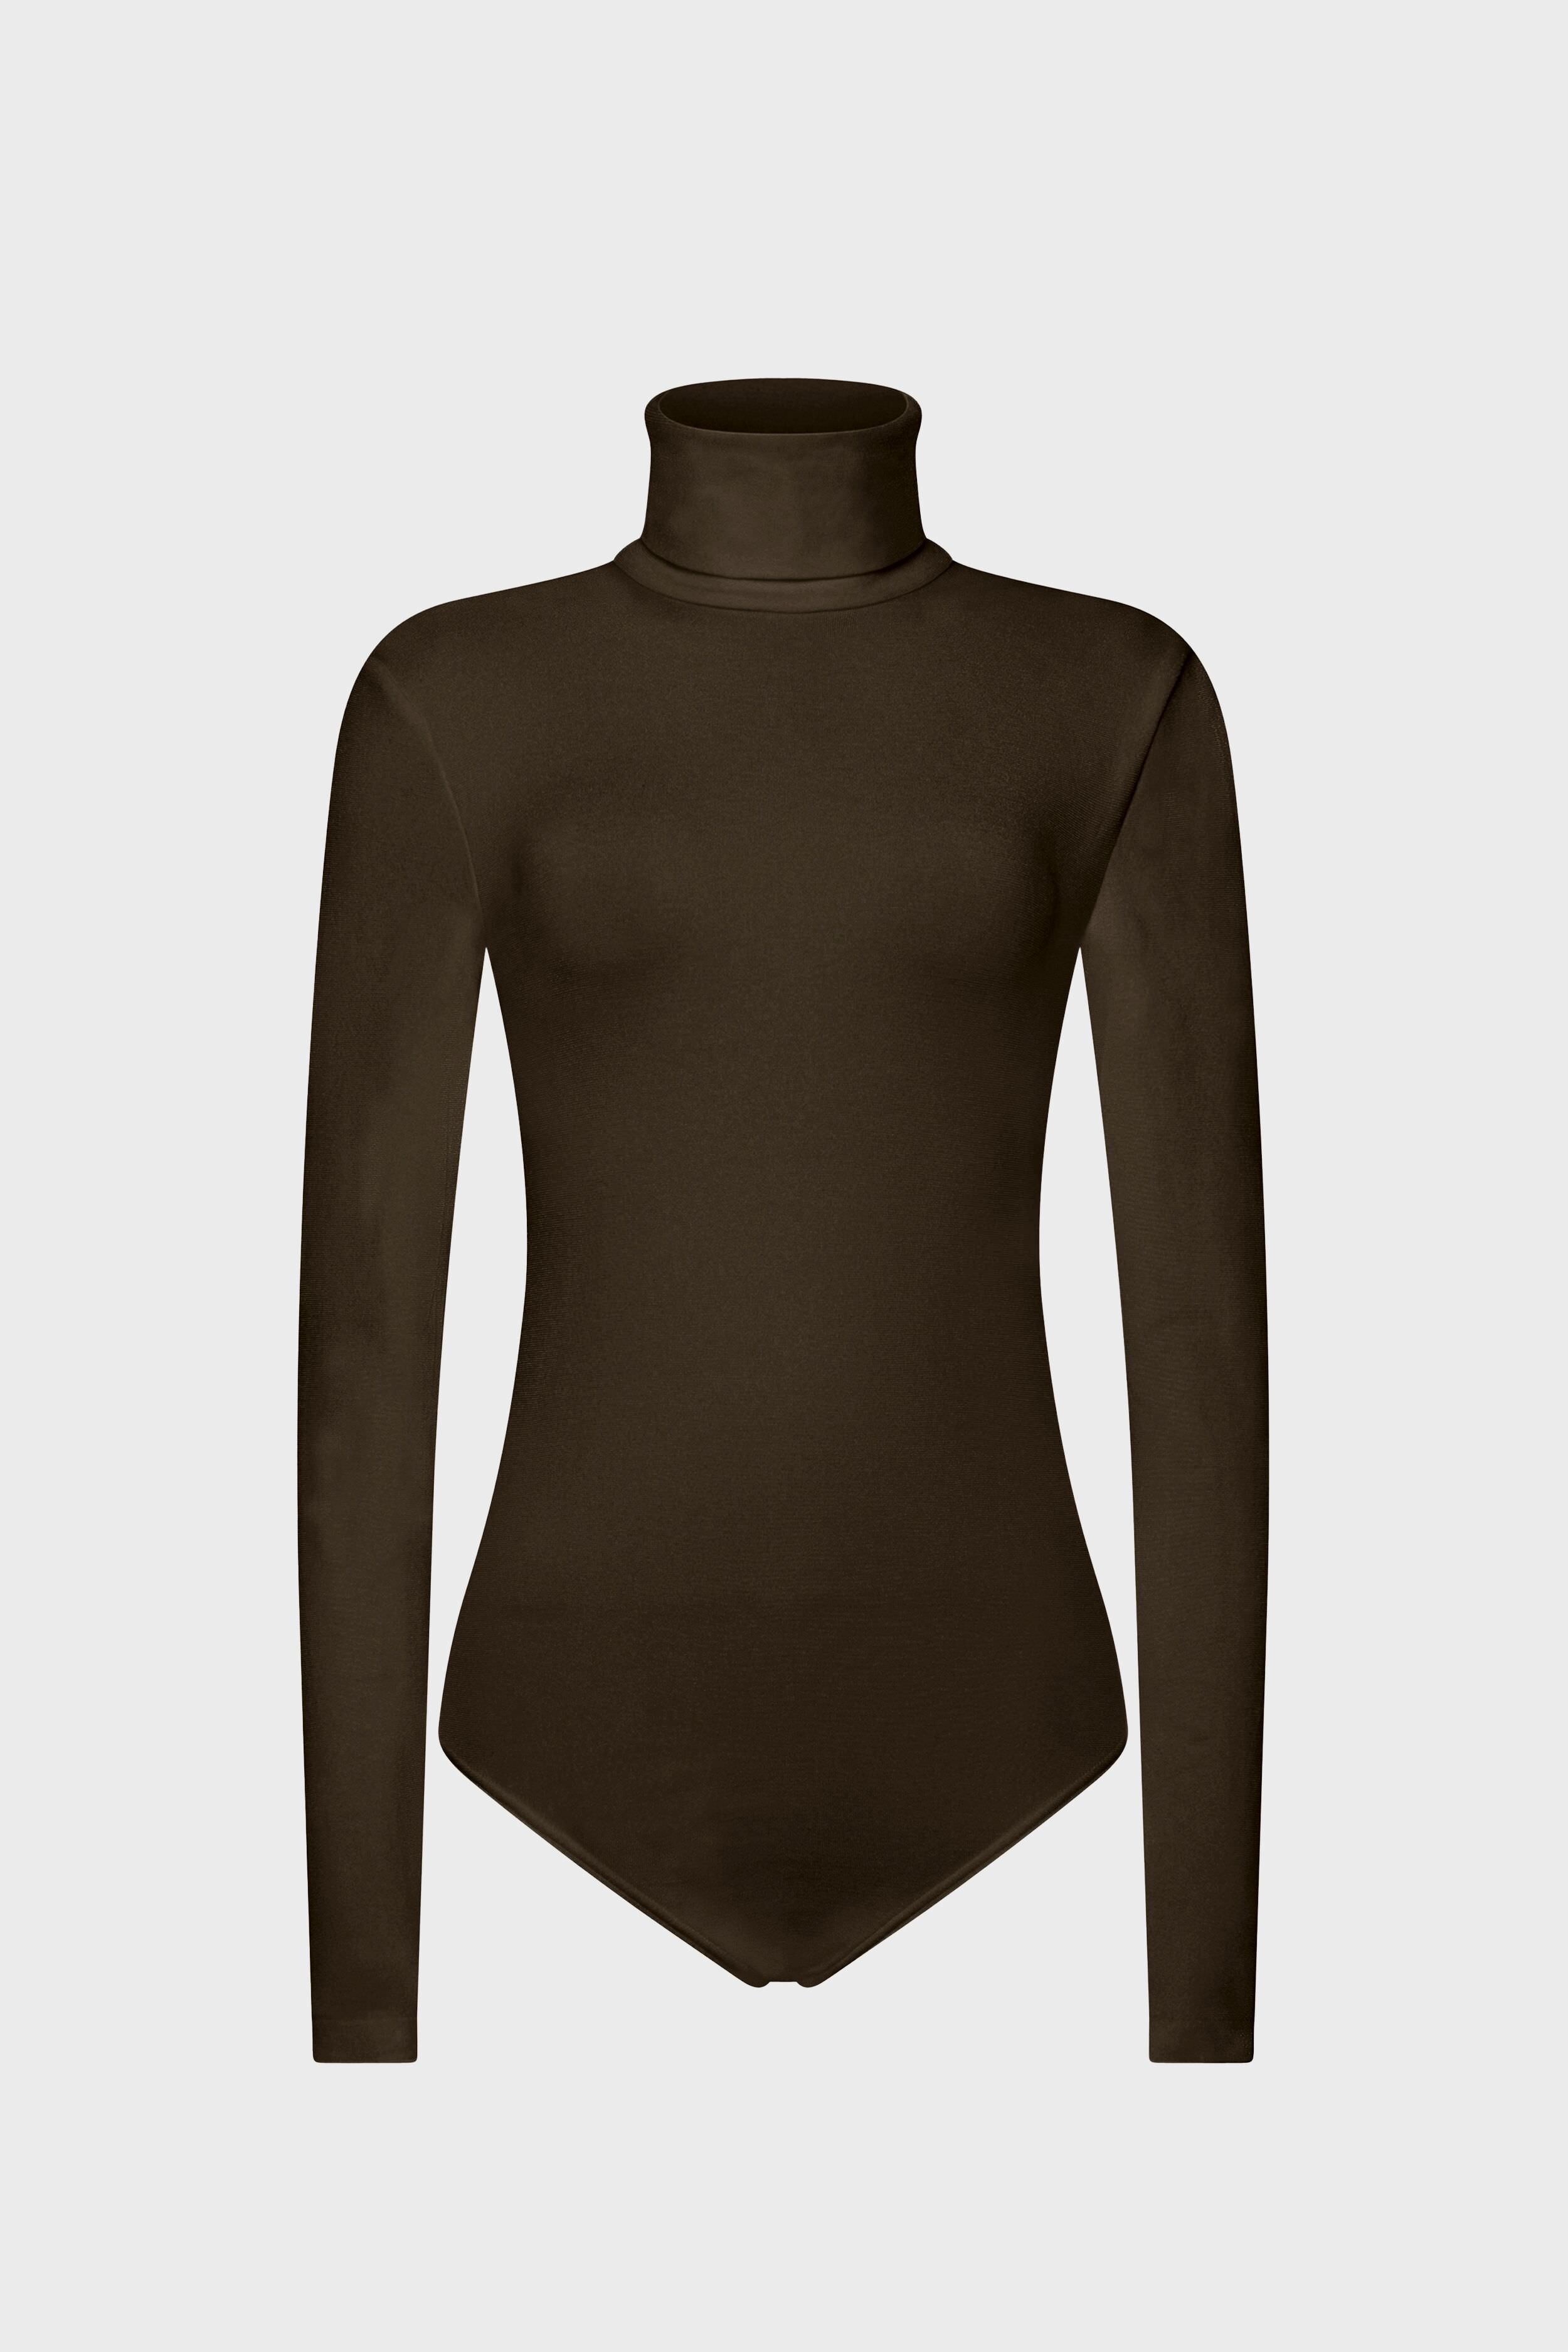 Wolford Colorado String Bodysuit in Black - Tops